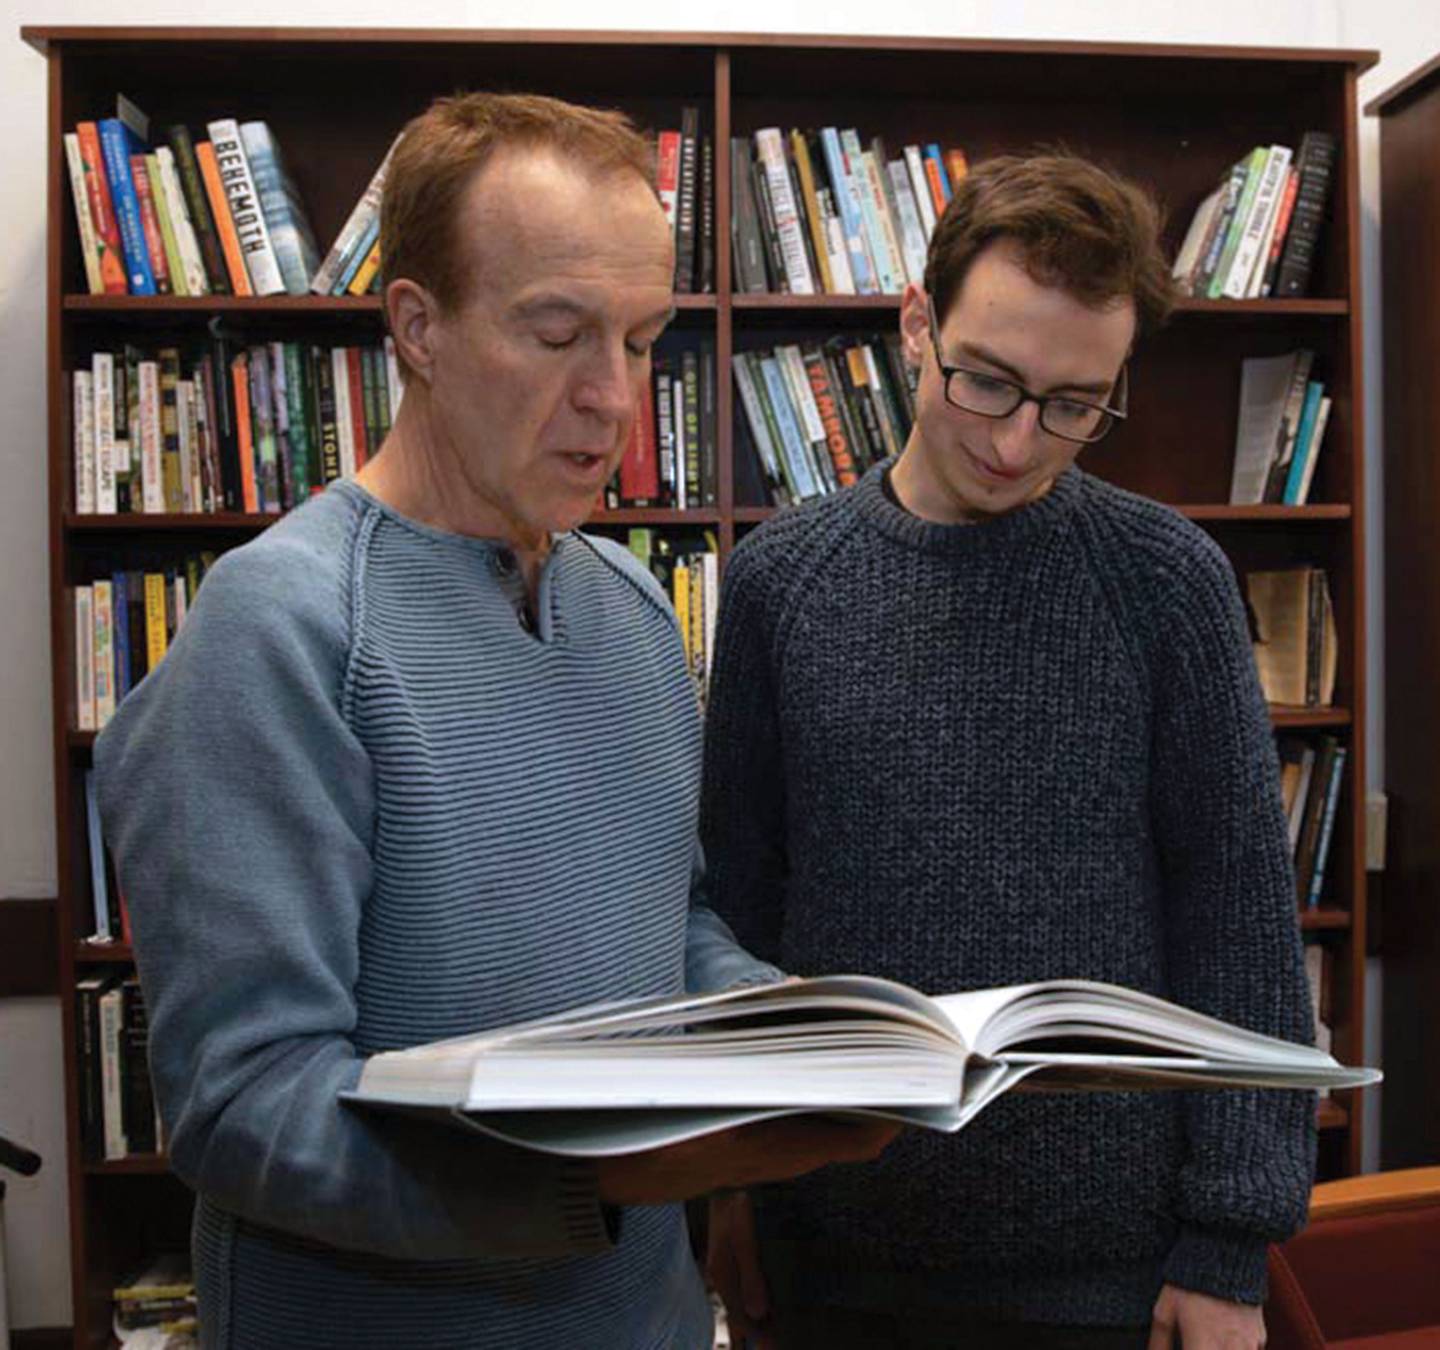 Robert Nixon and Jack Lohmann look at a large book